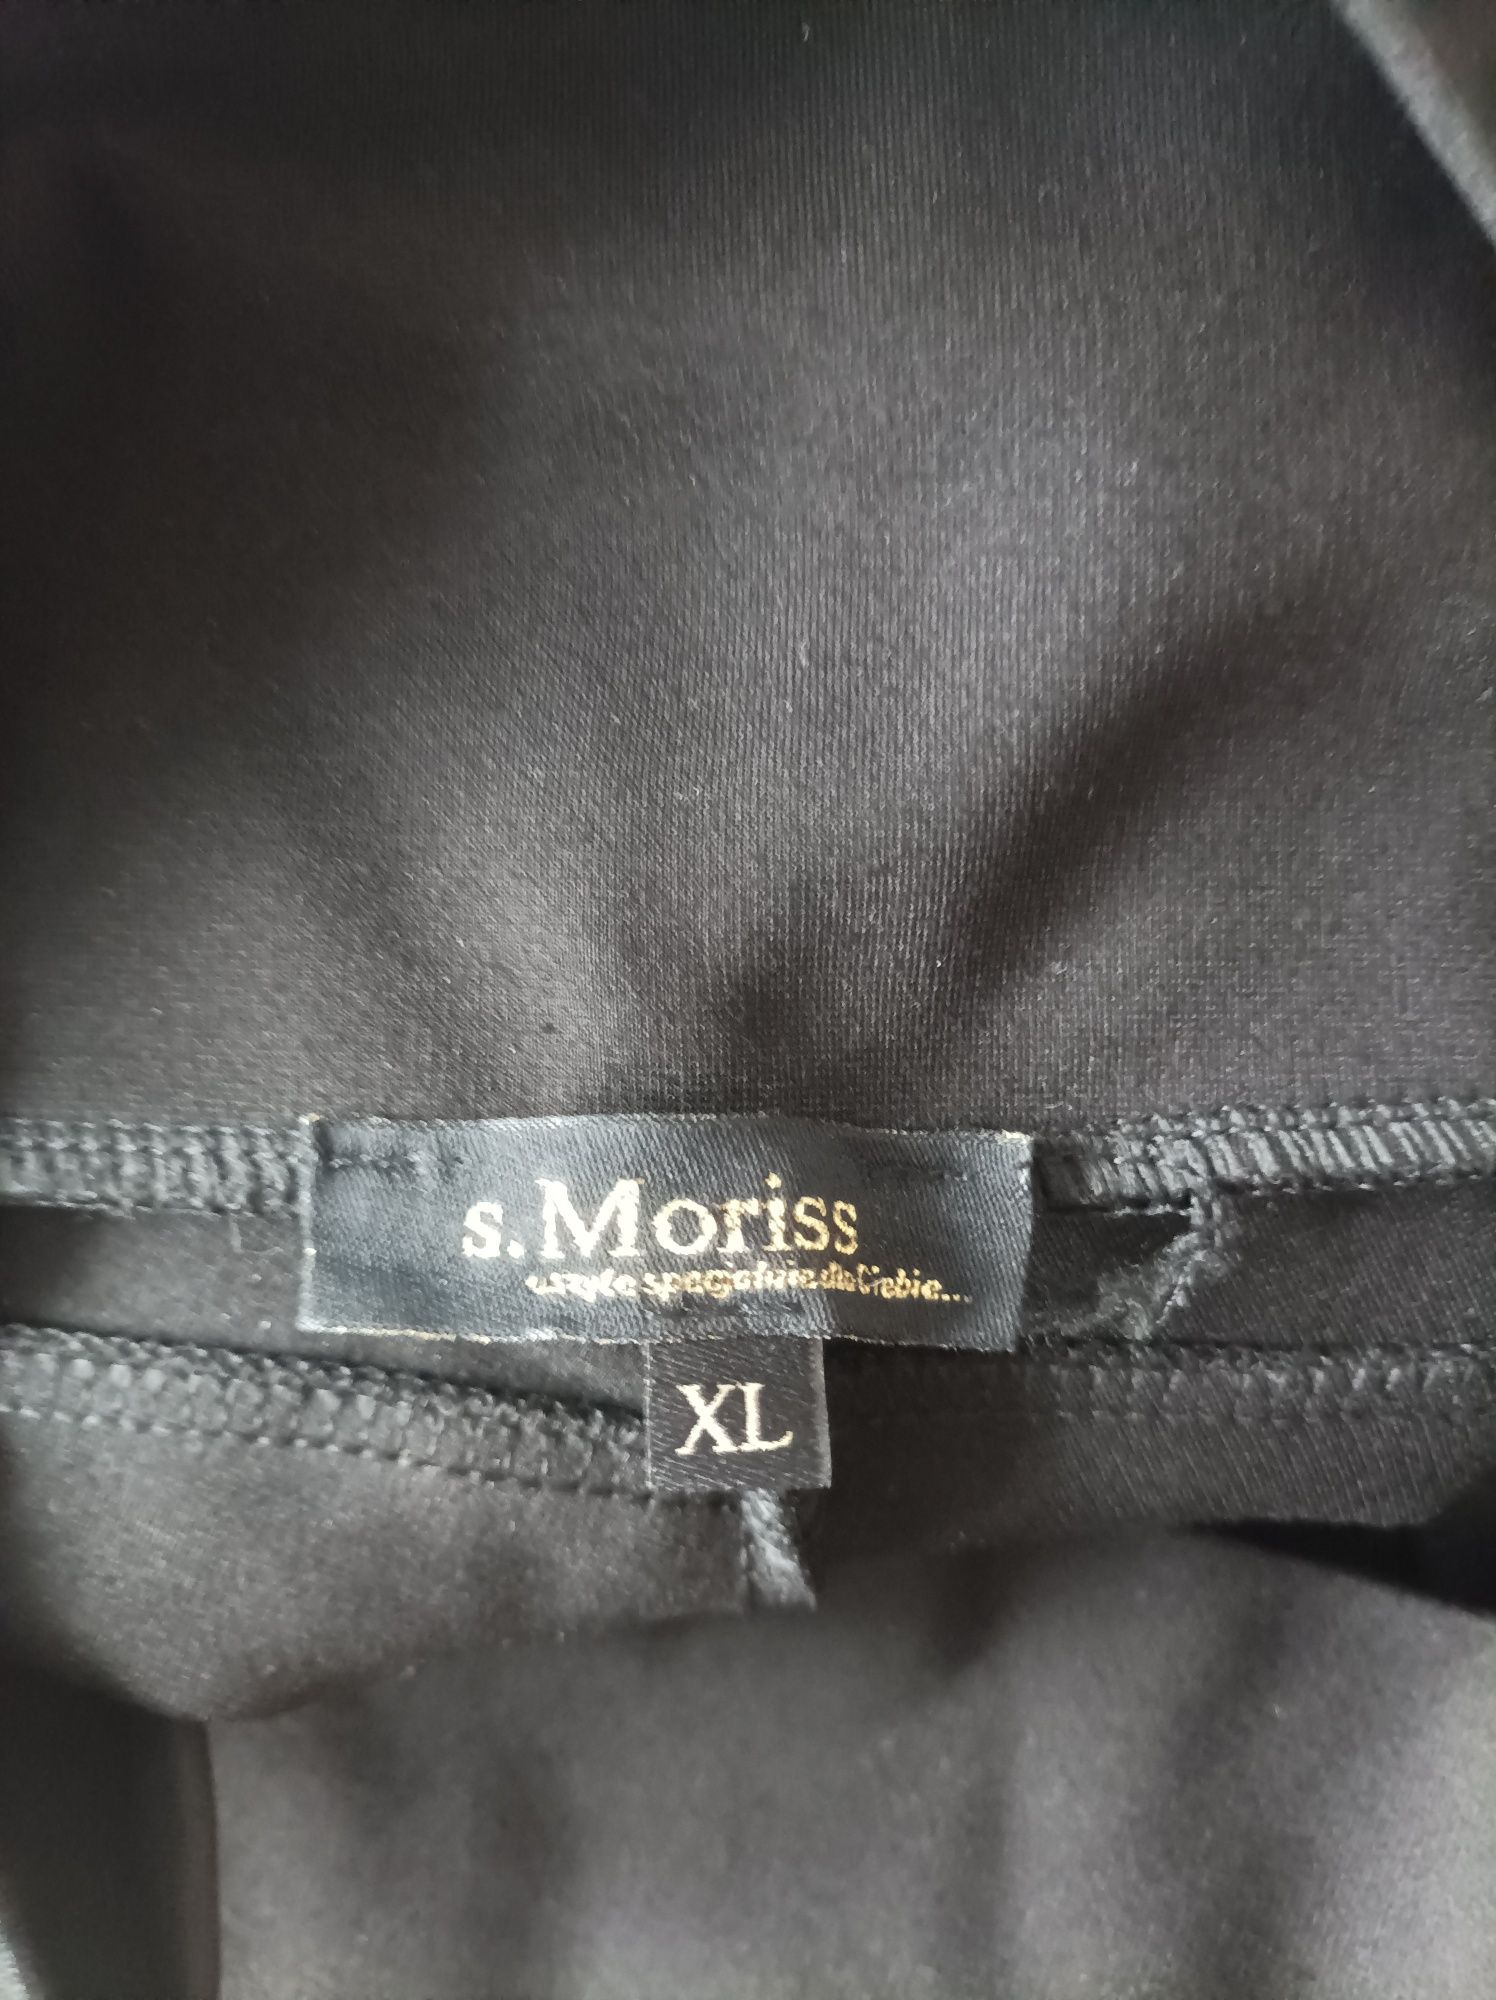 Spodnie eleganckie od garnituru moriss xl polski produkt